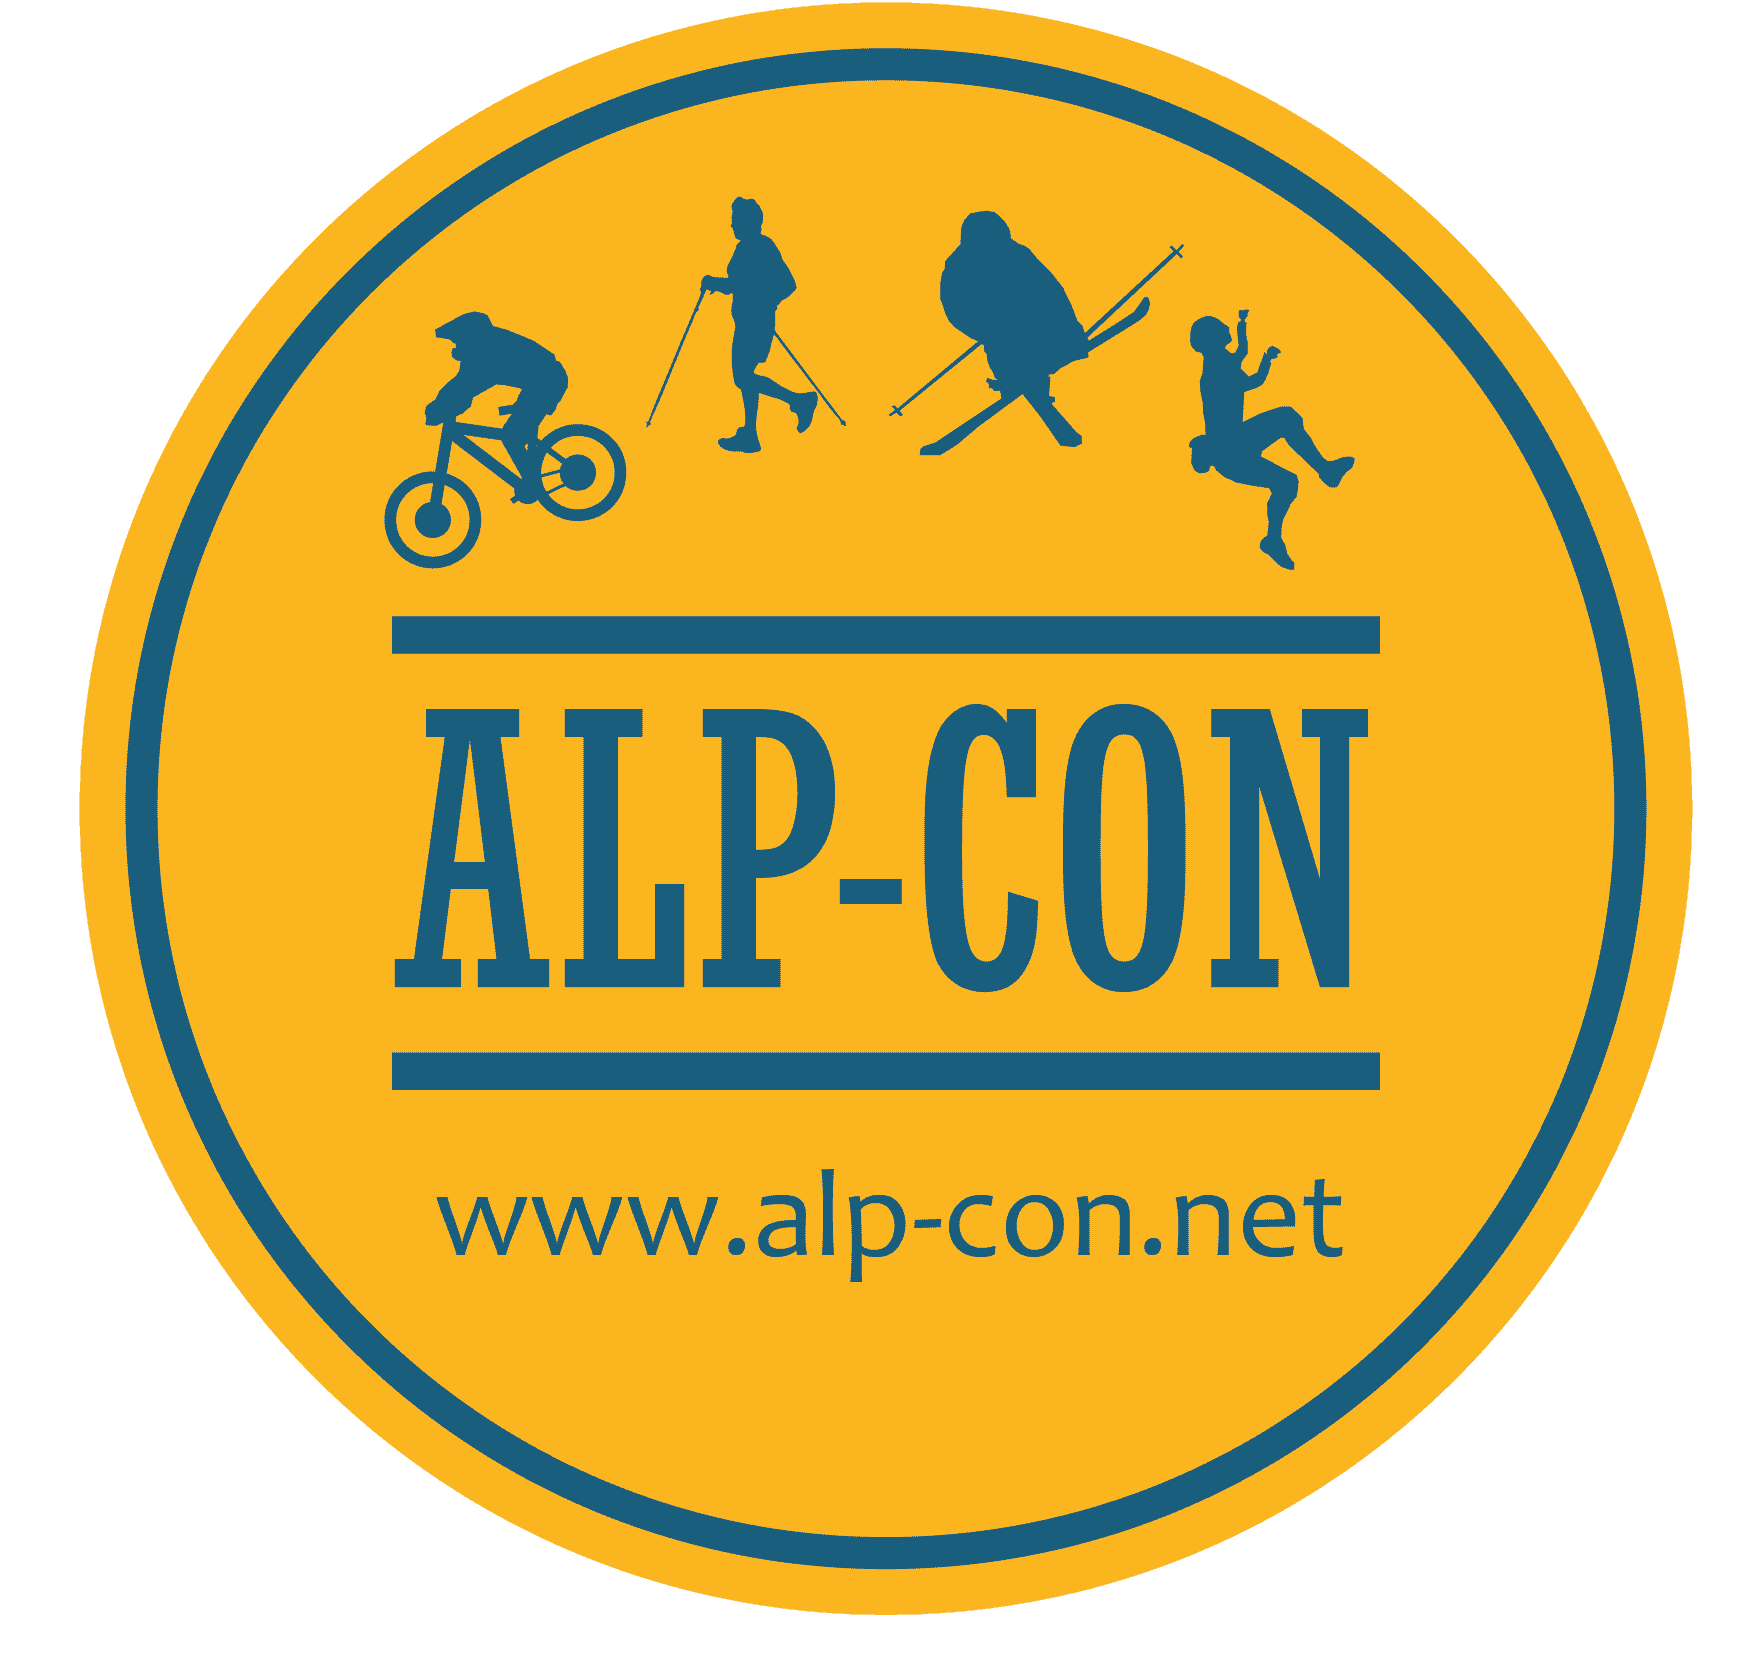 (c) Alp-con.net